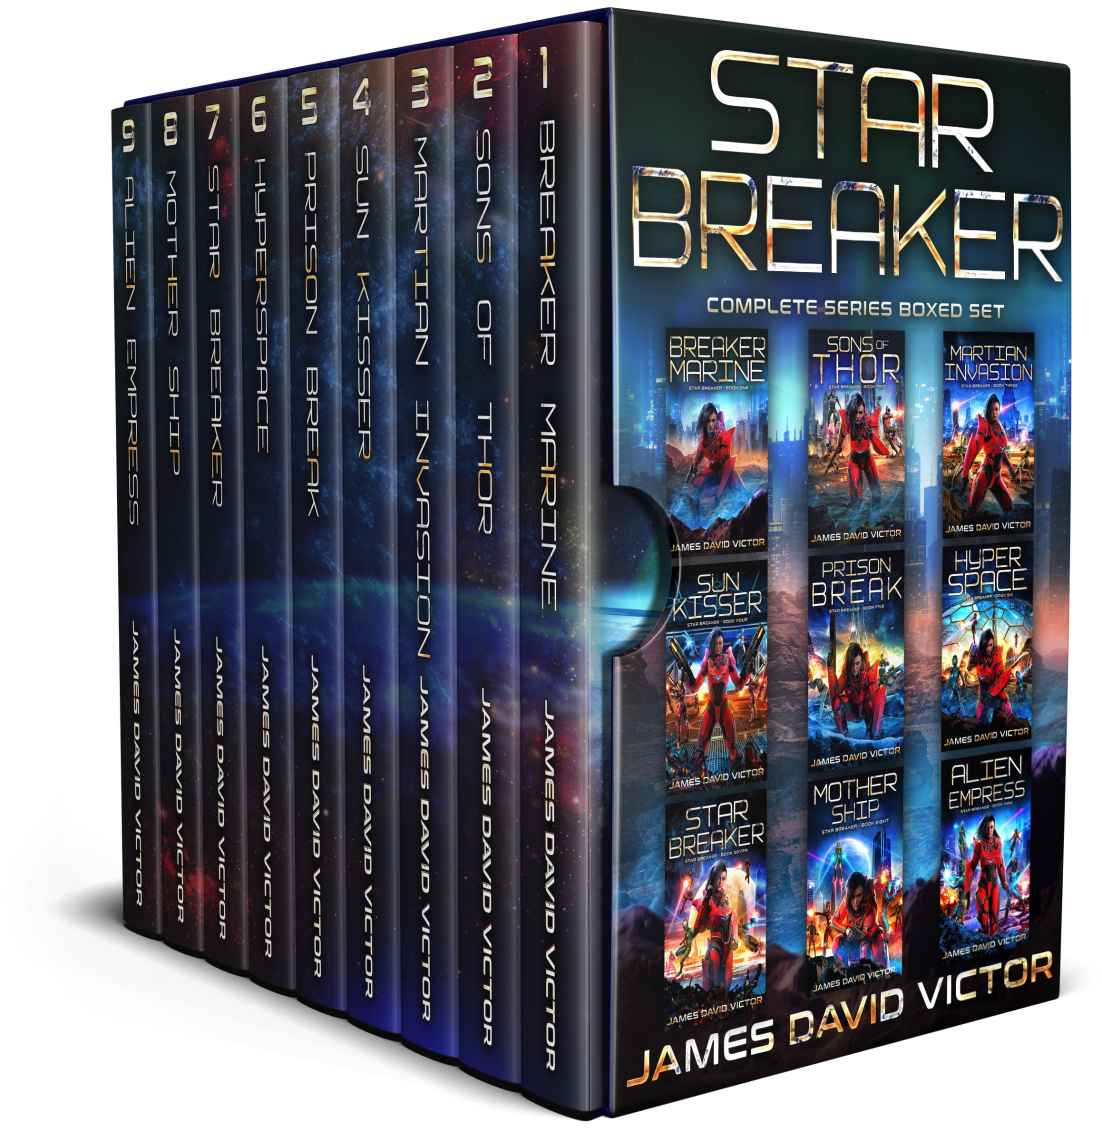 Star Breaker Complete Series Boxed Set